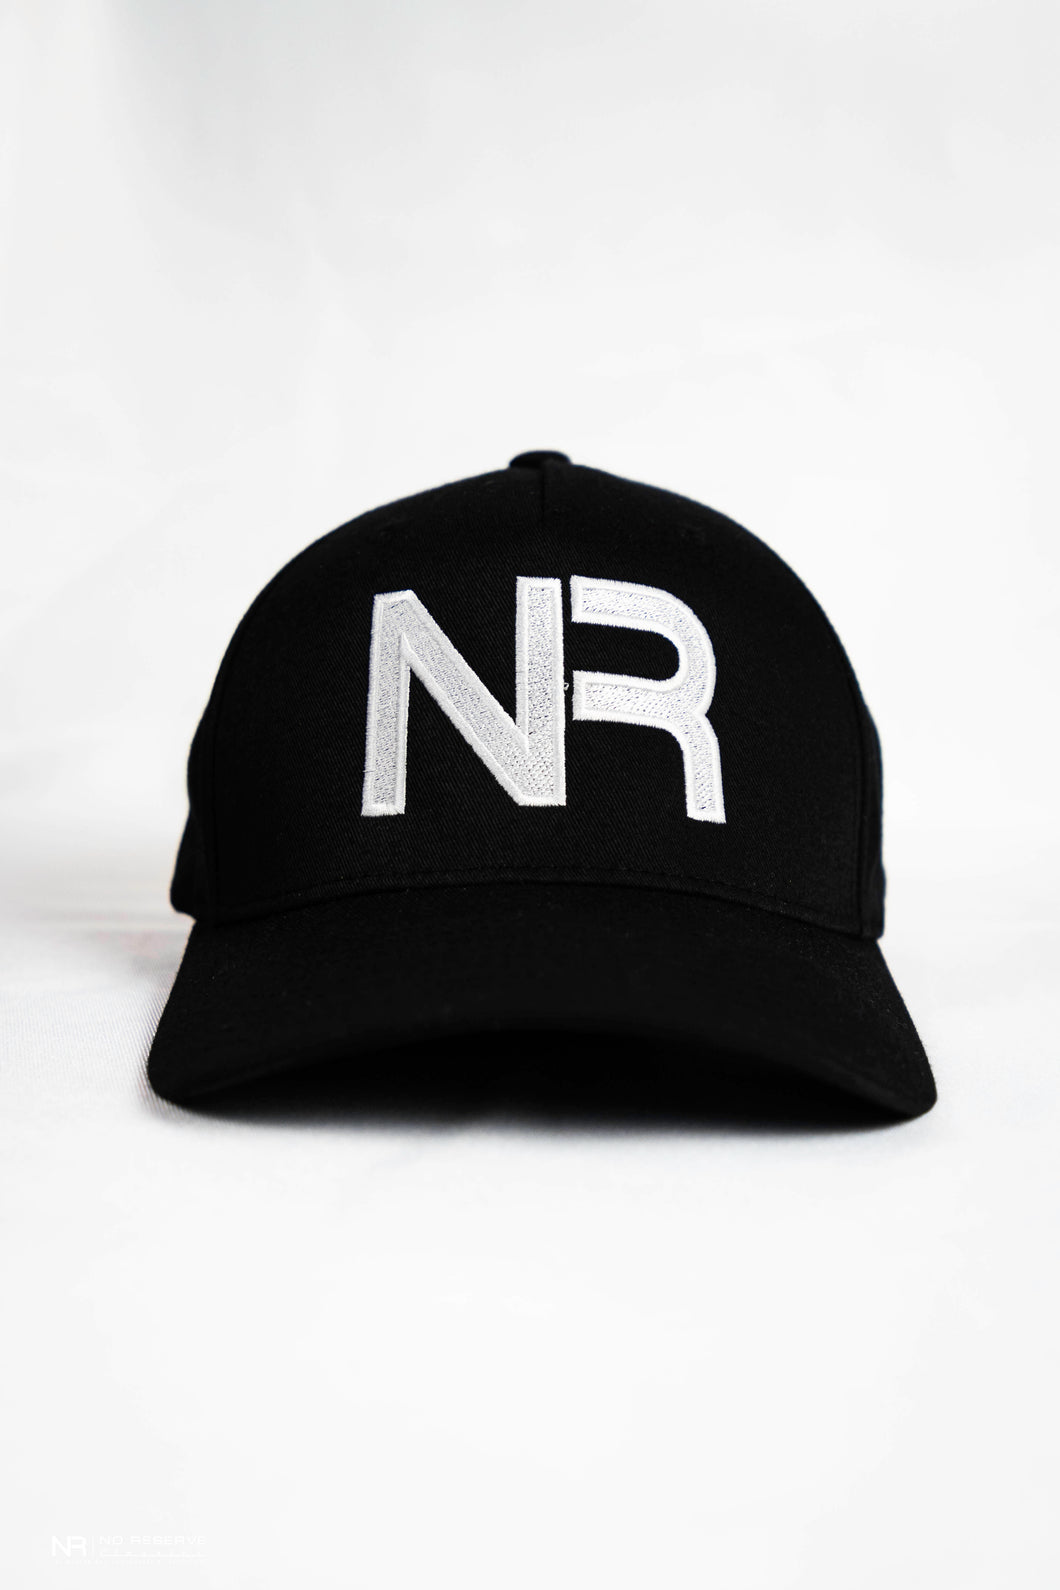 NR Hat